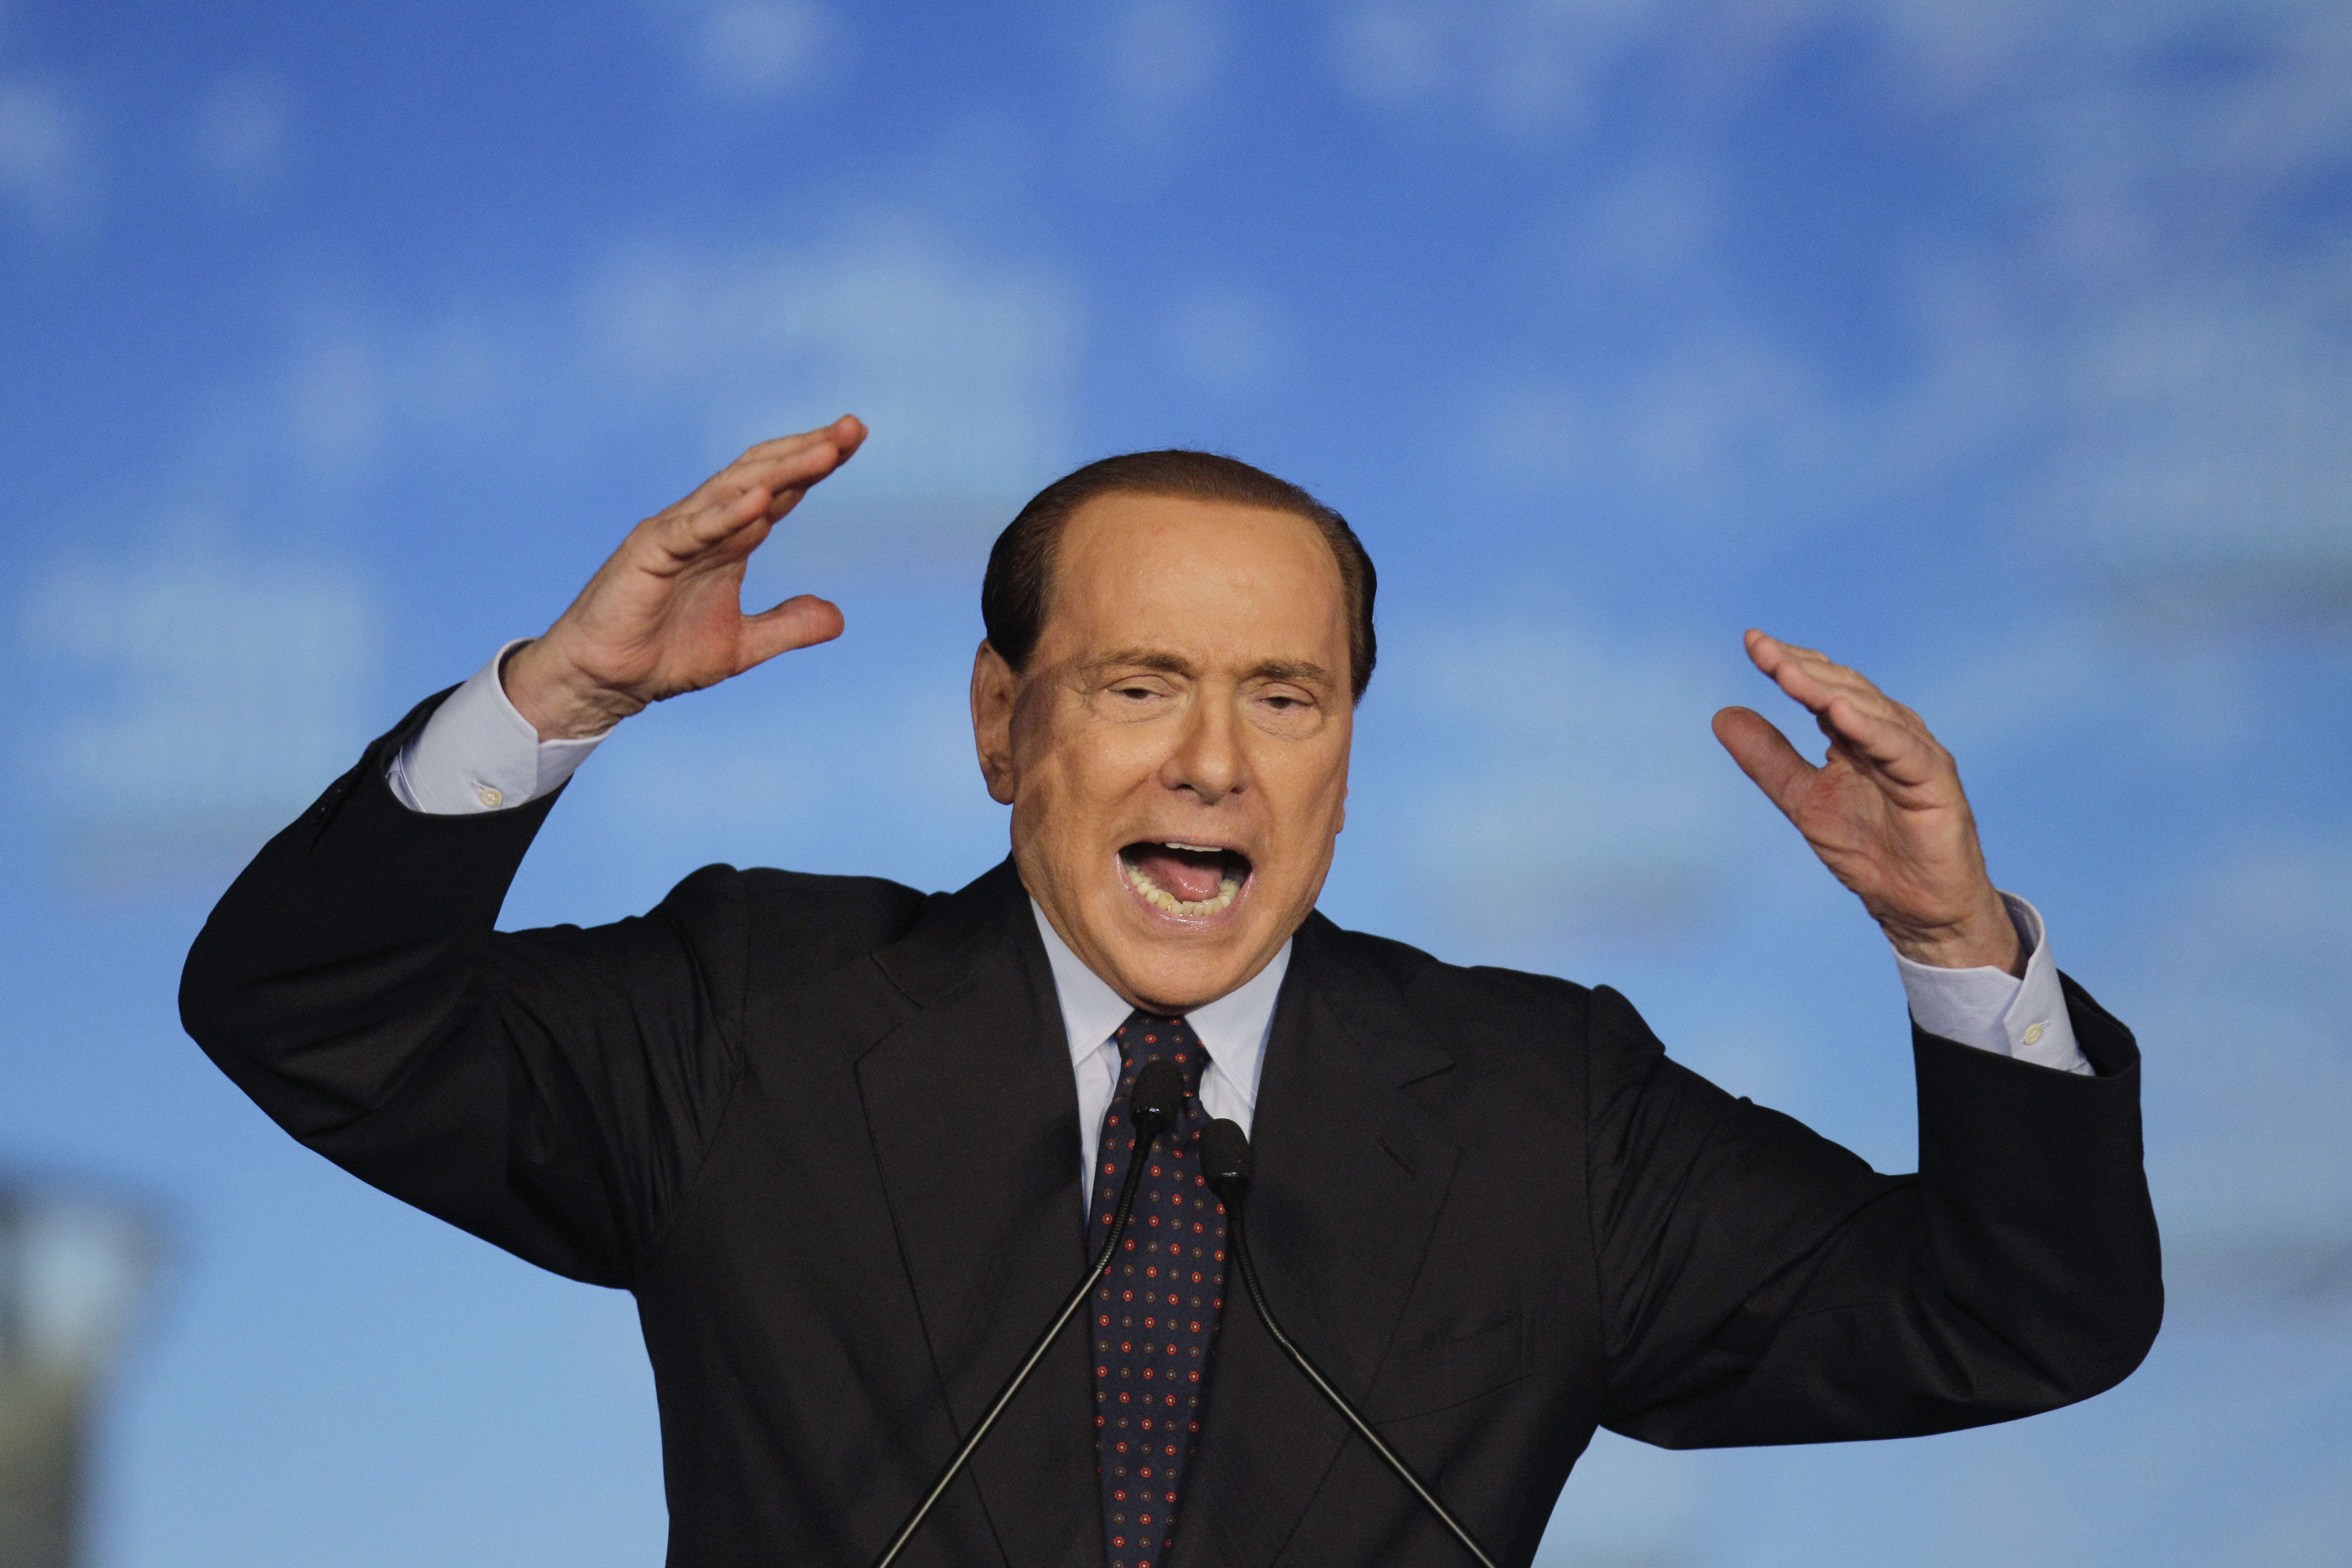 Berlusconi, Silvio Berlusconi, Italien, Sexskandal